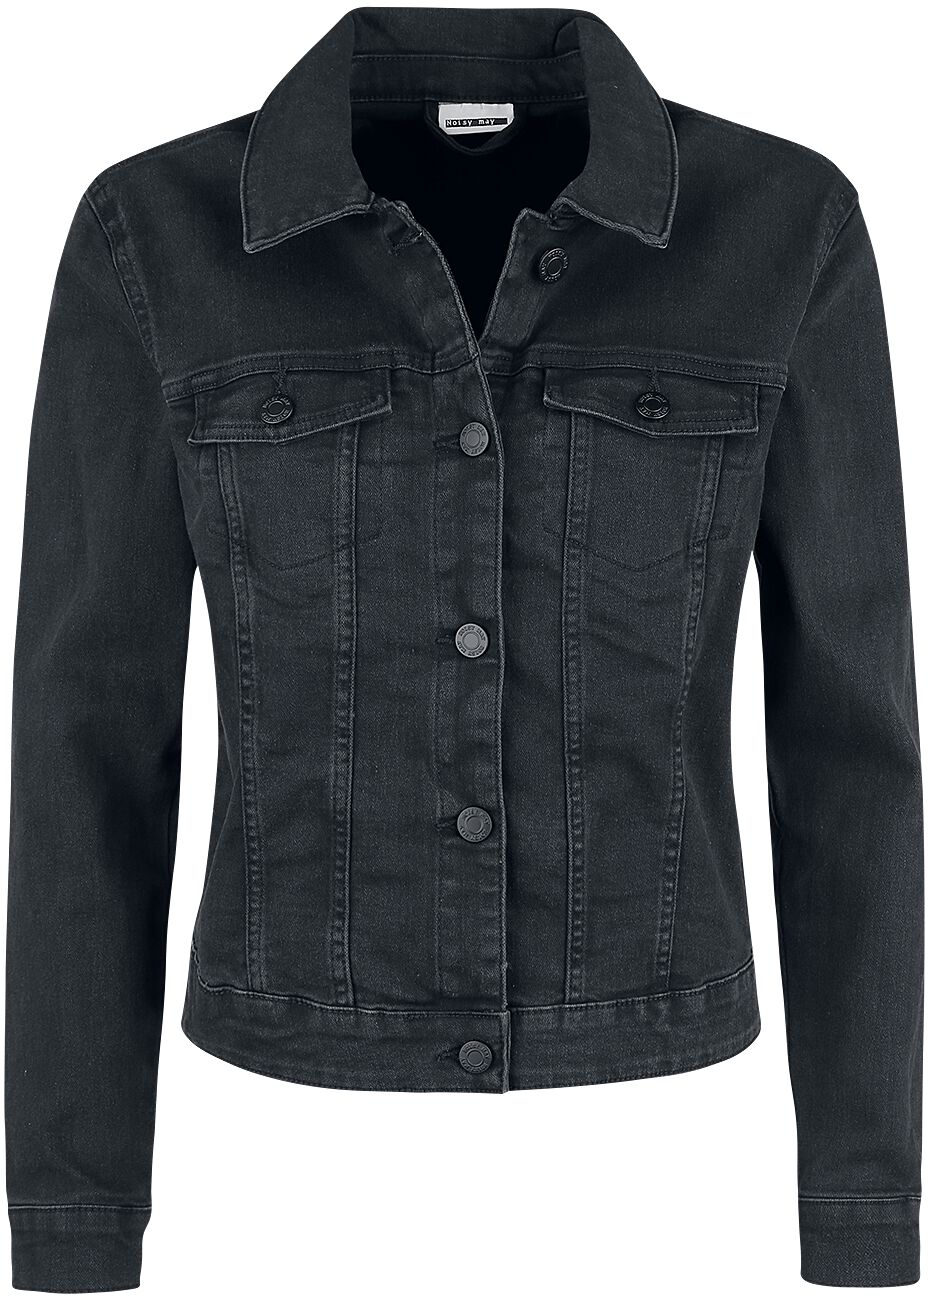 NMDebra Black Wash Denim Jacket Jeansjacke schwarz von Noisy May